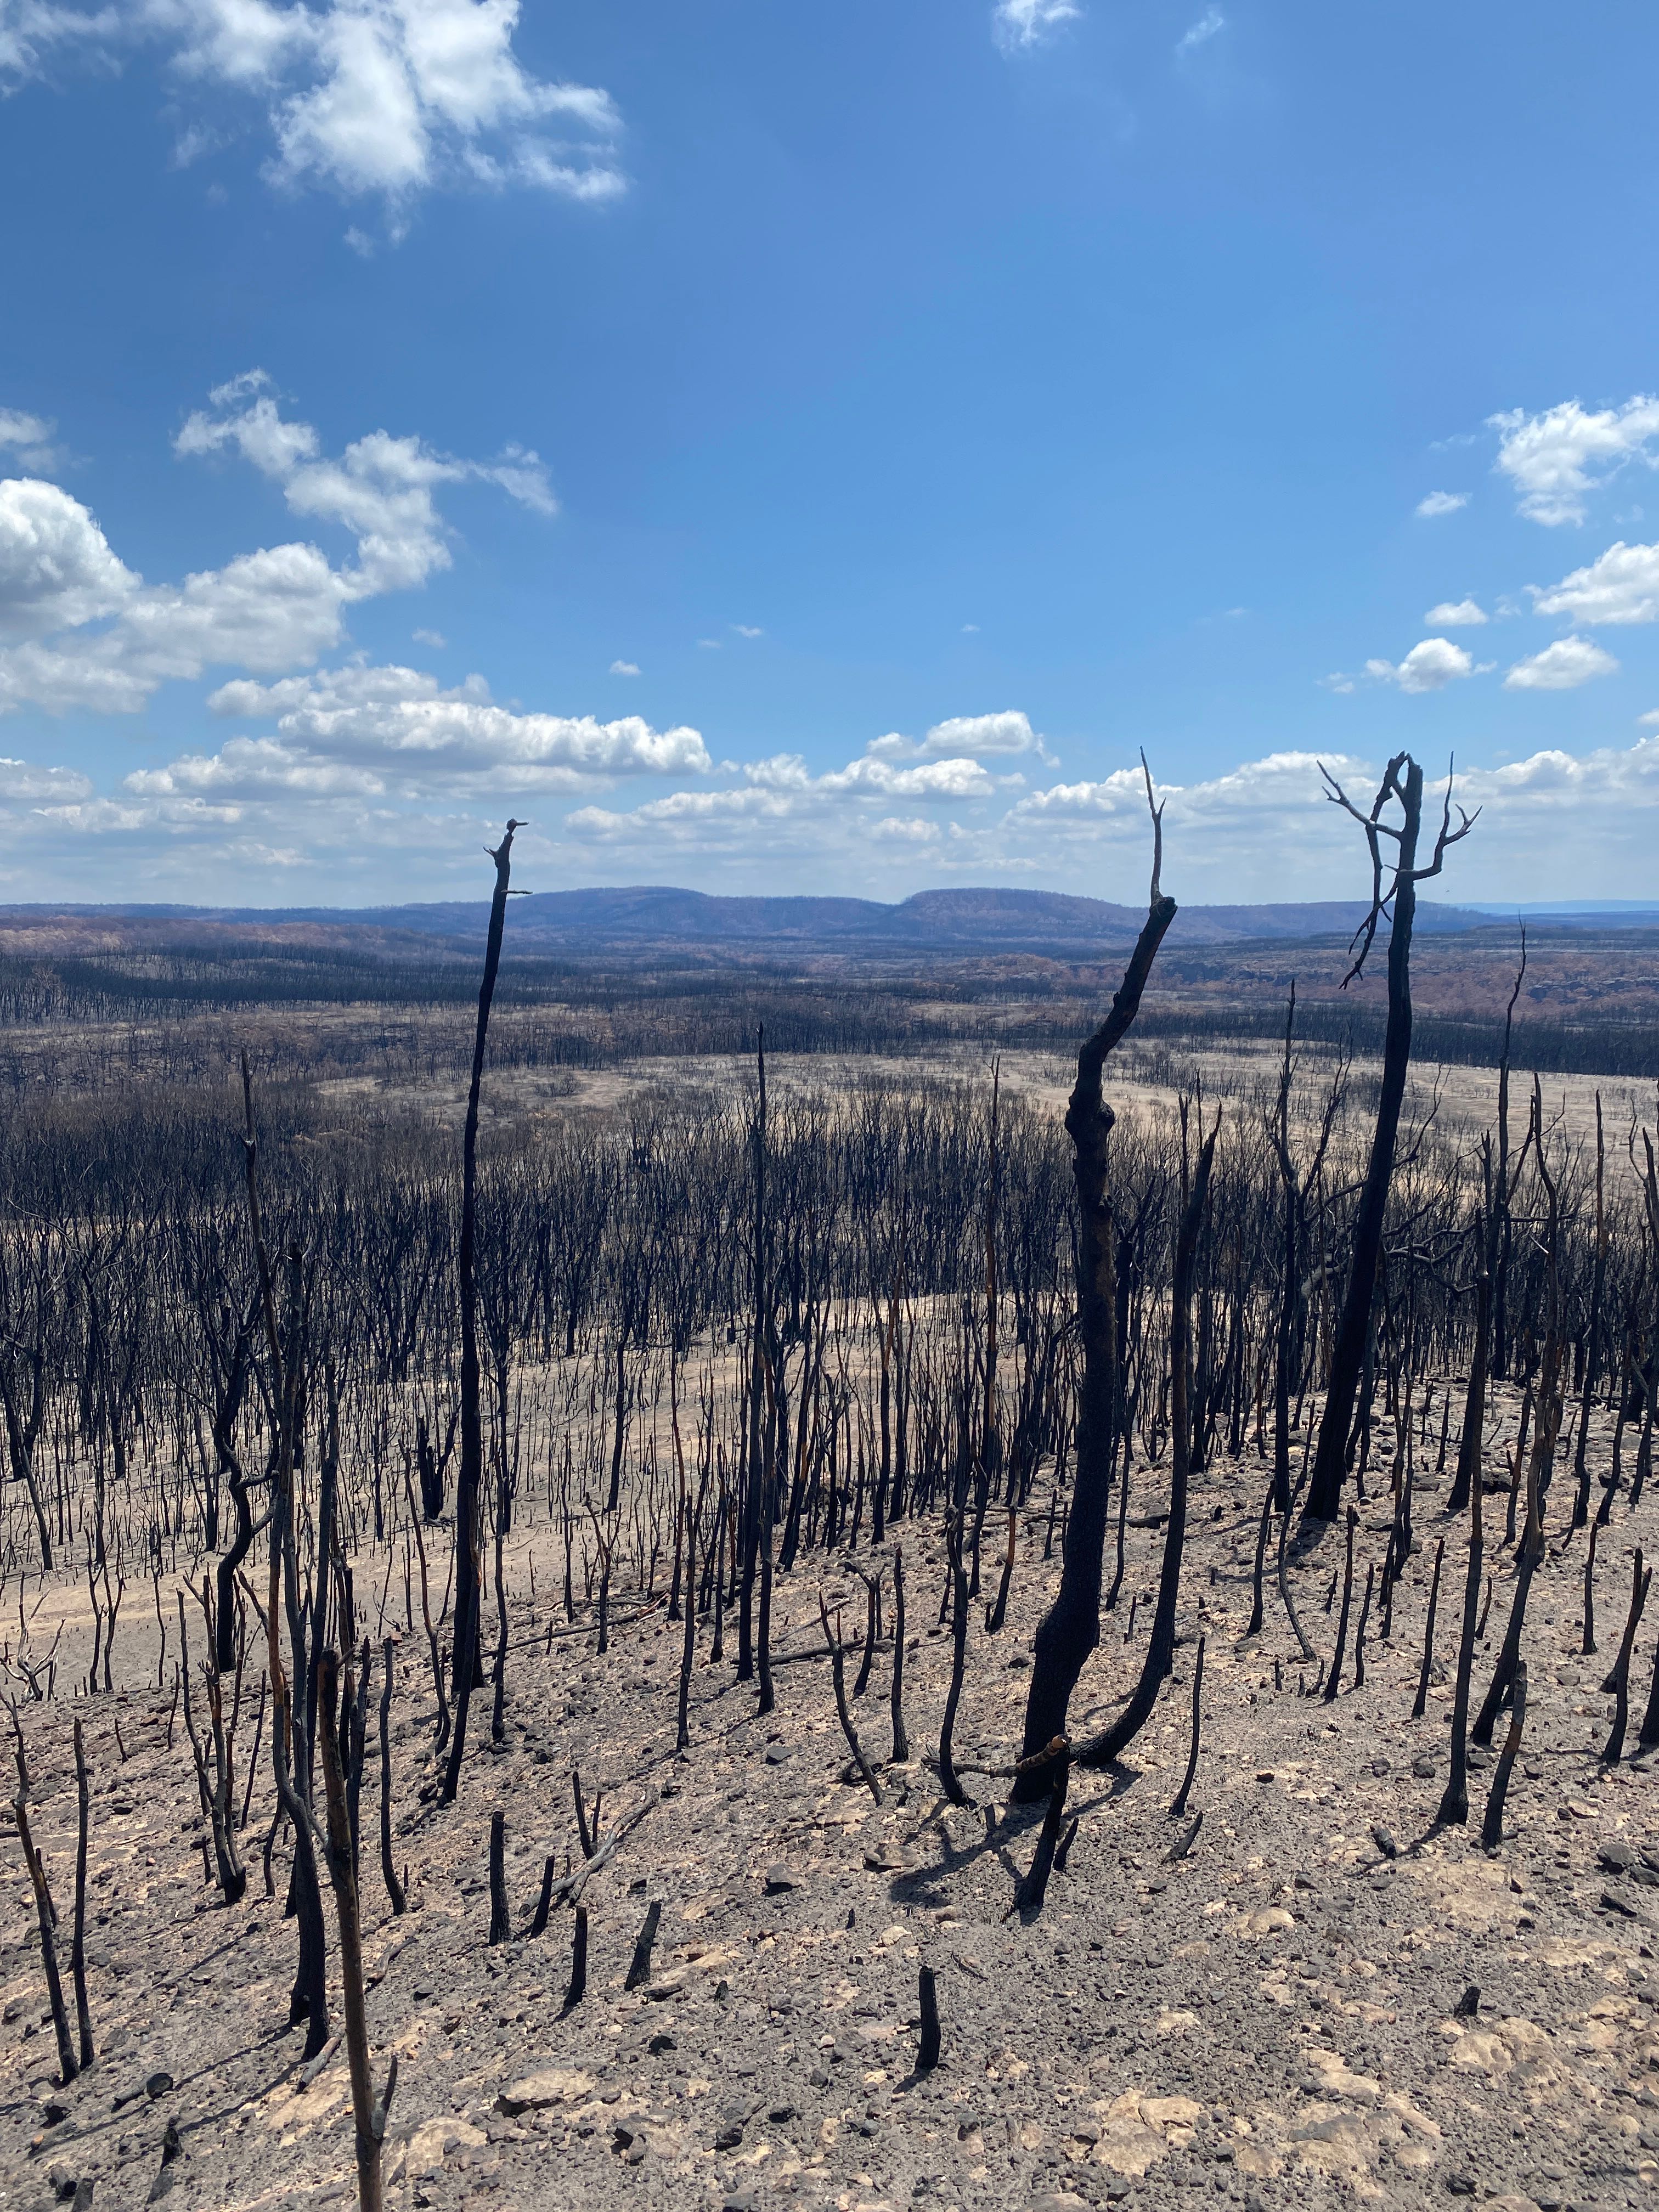 Image showing a landscape after a fire